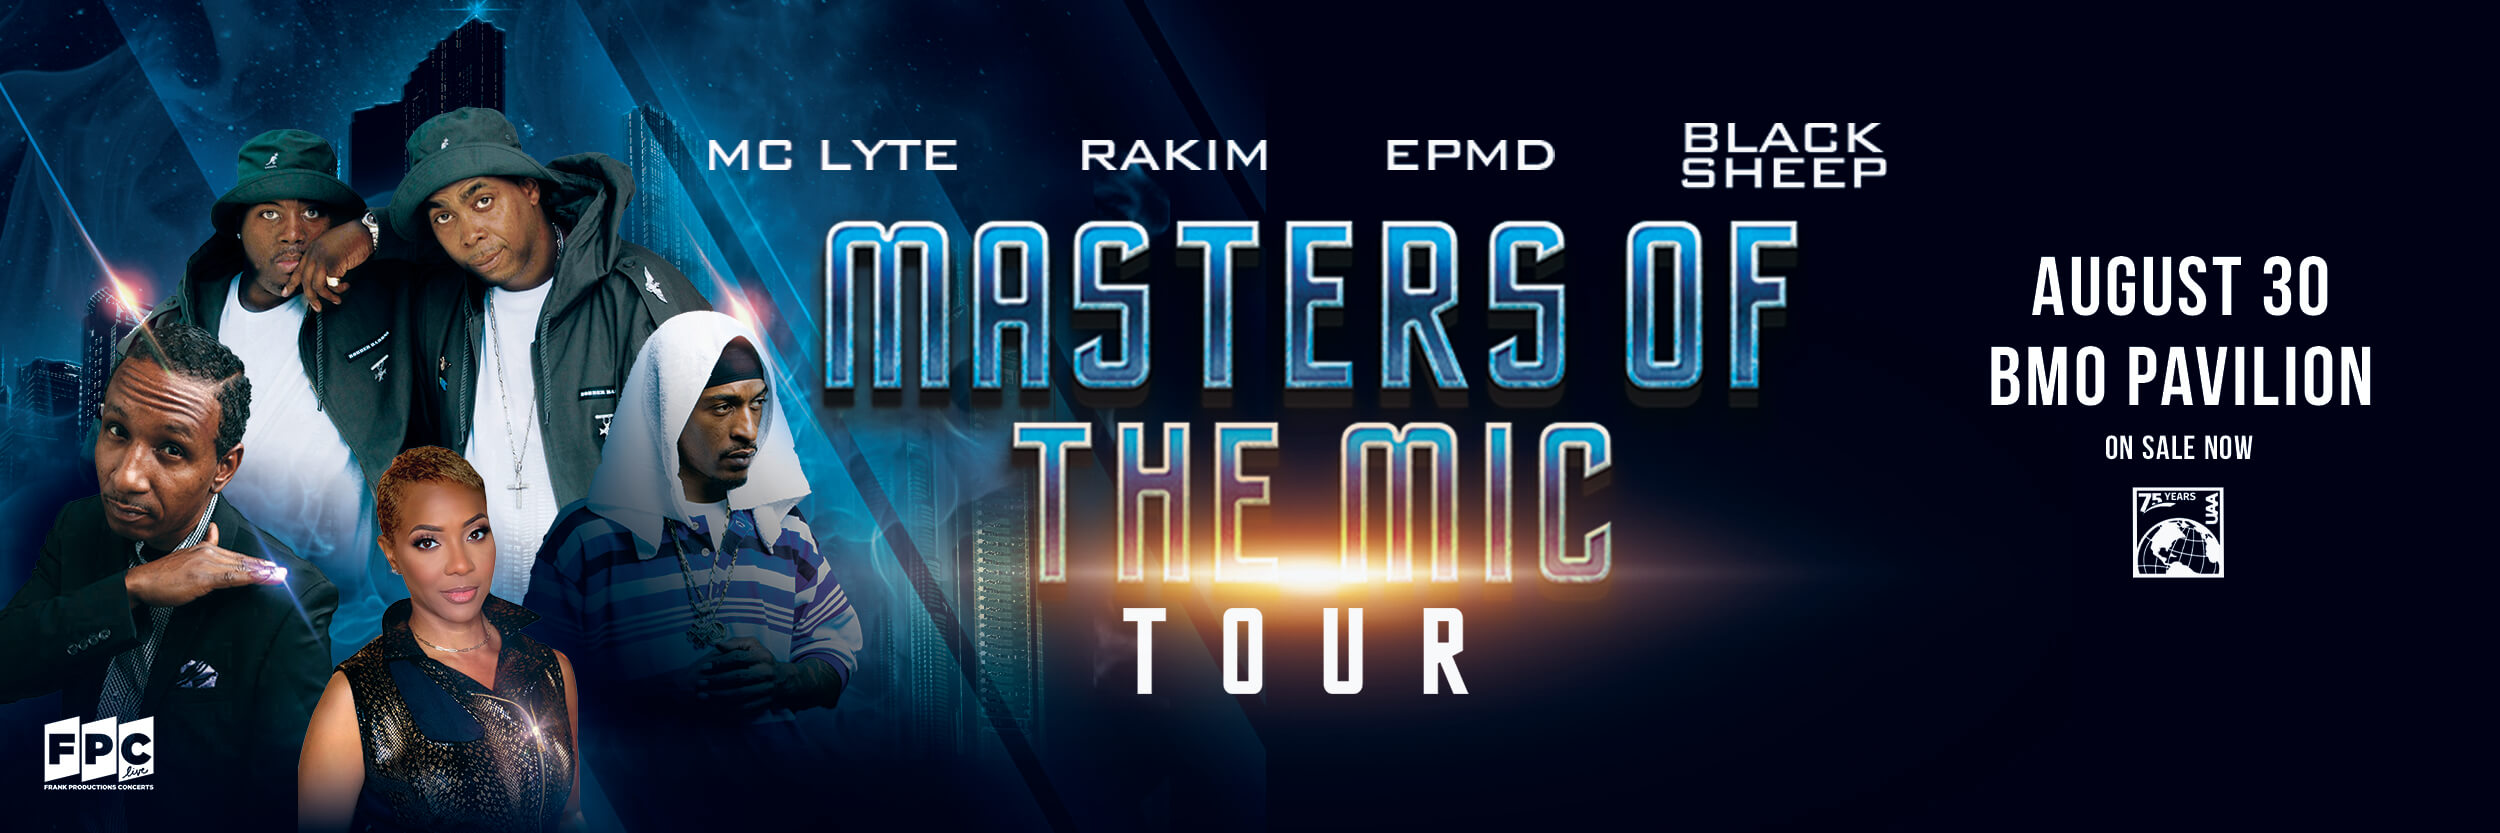 Masters of the Mic - with MC Lyte, Rakim, EPMD, and Black Sheep